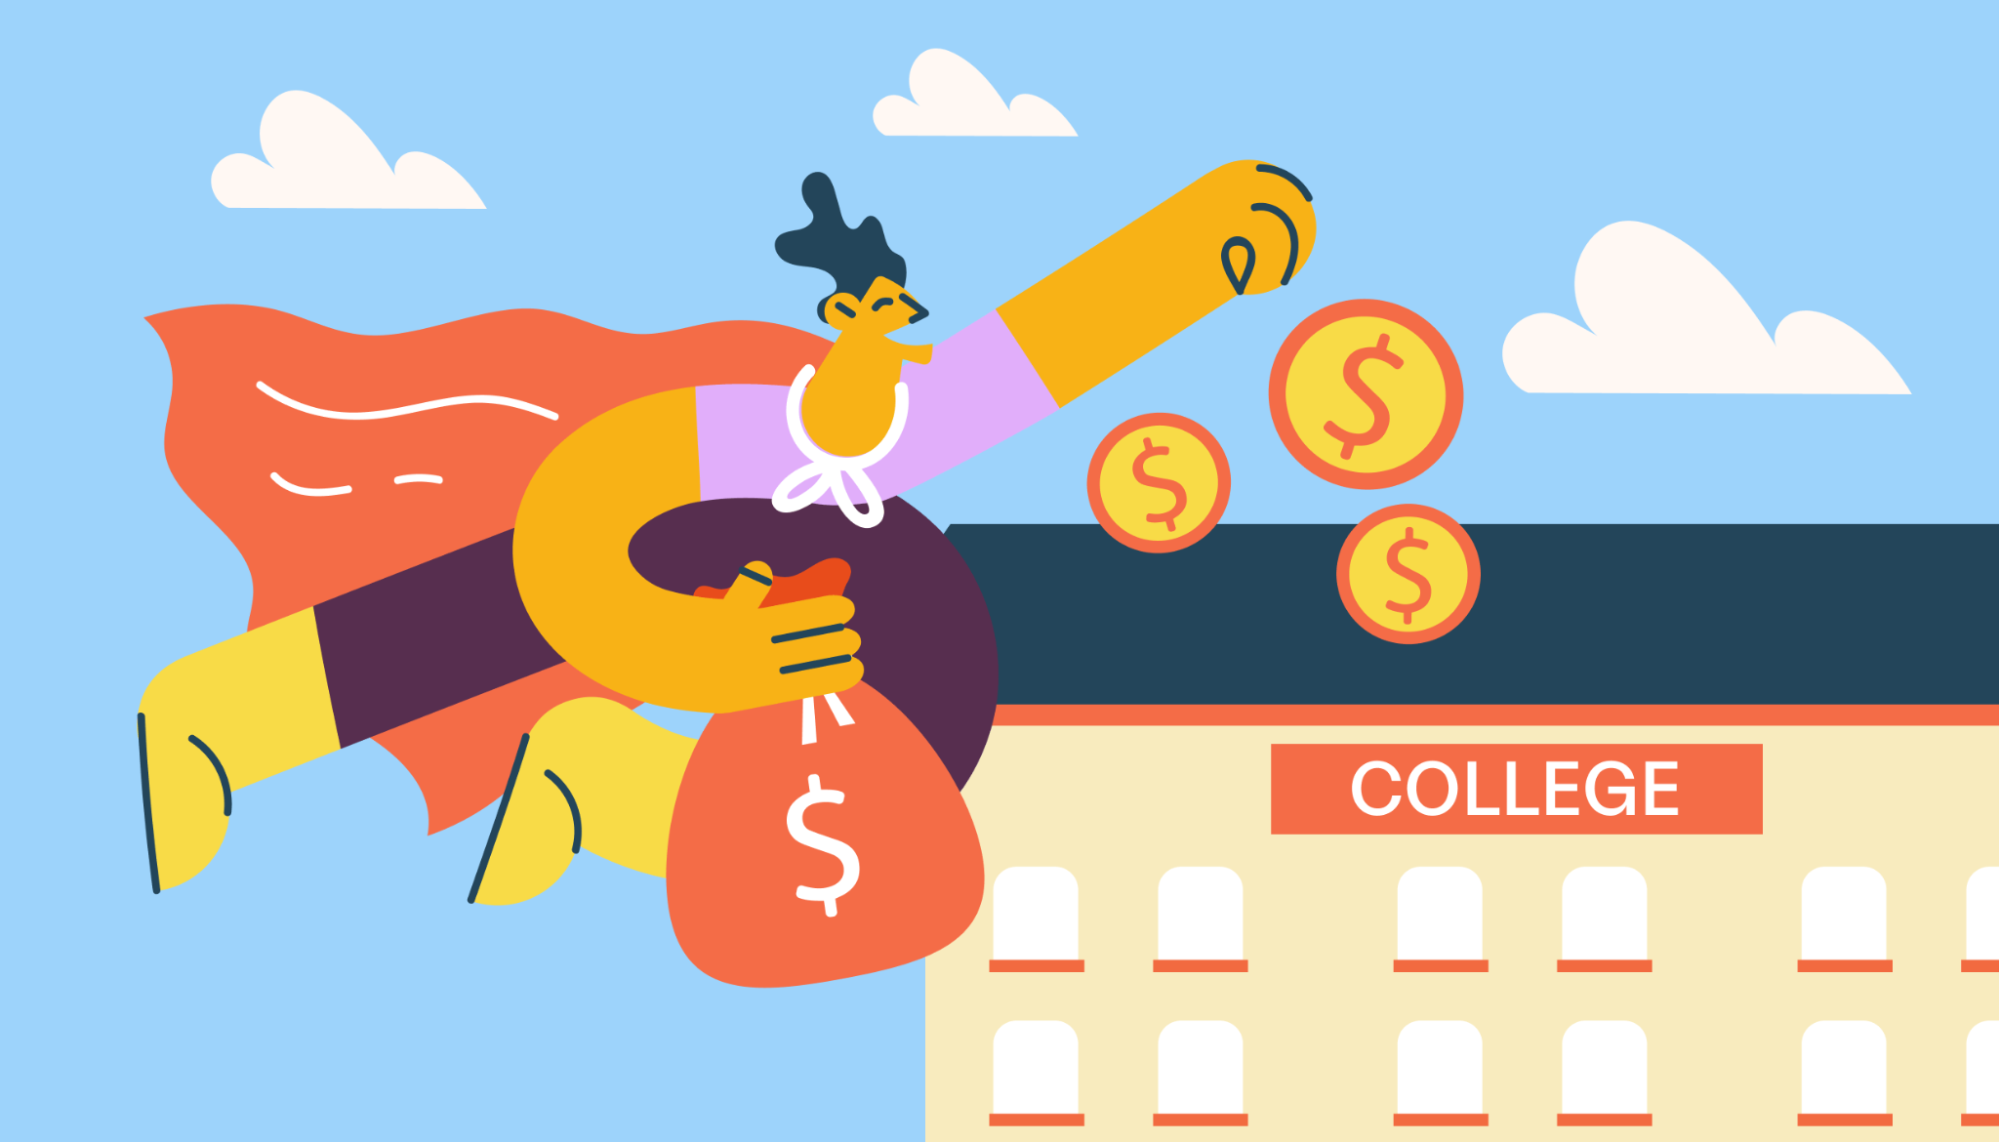 Superhero removing student loans